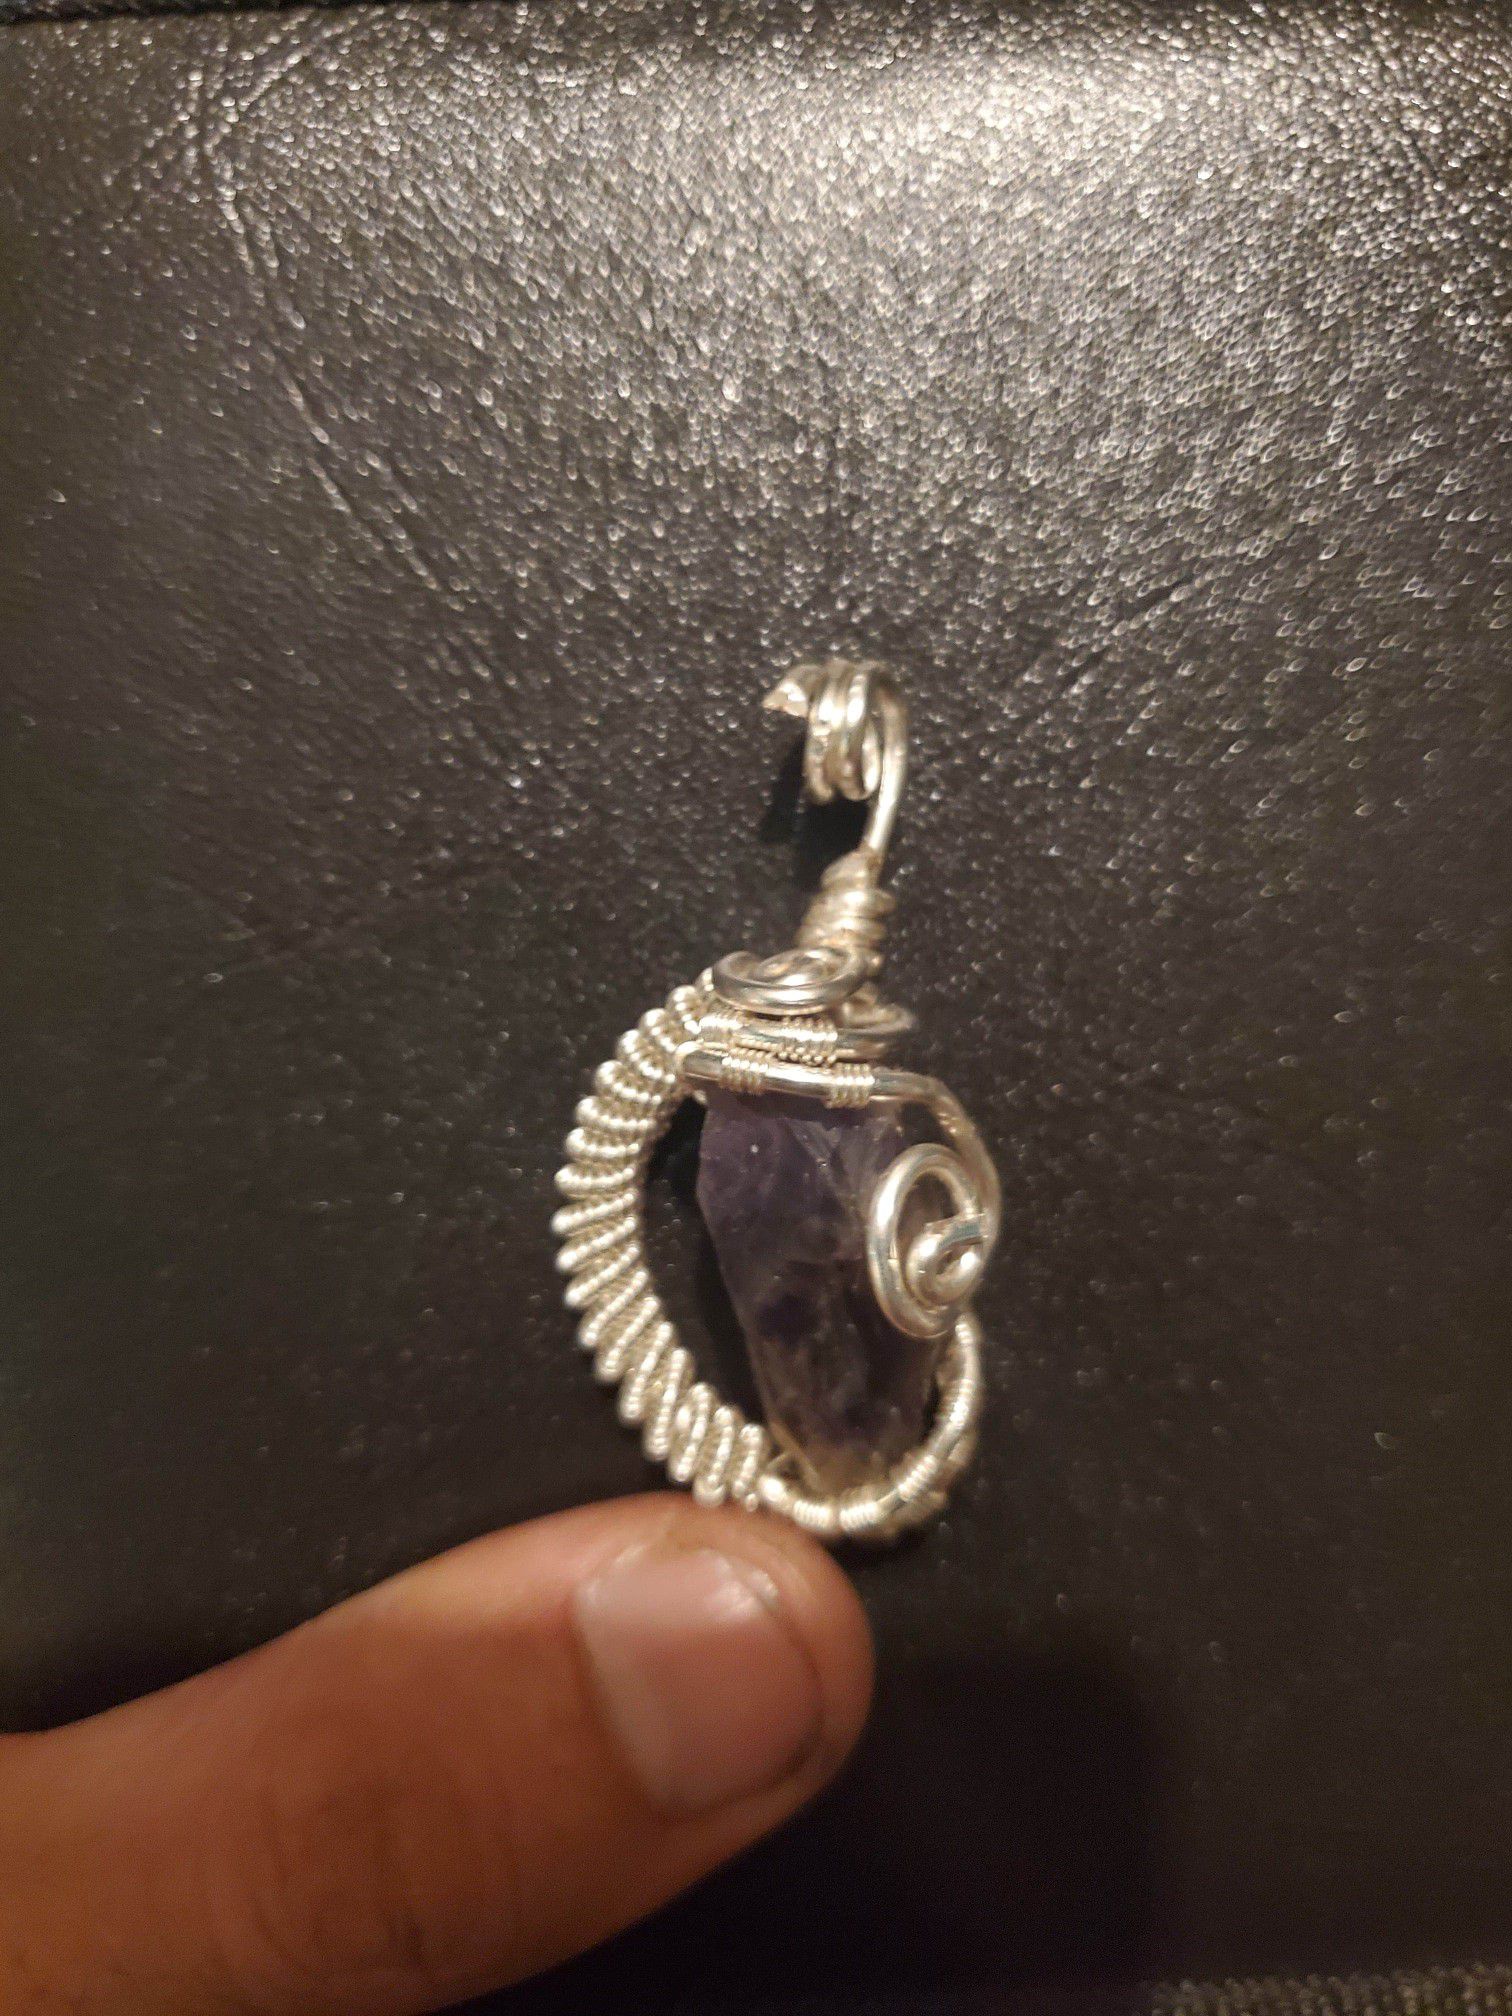 Custom made pendant jewelry - amethyst wrapped